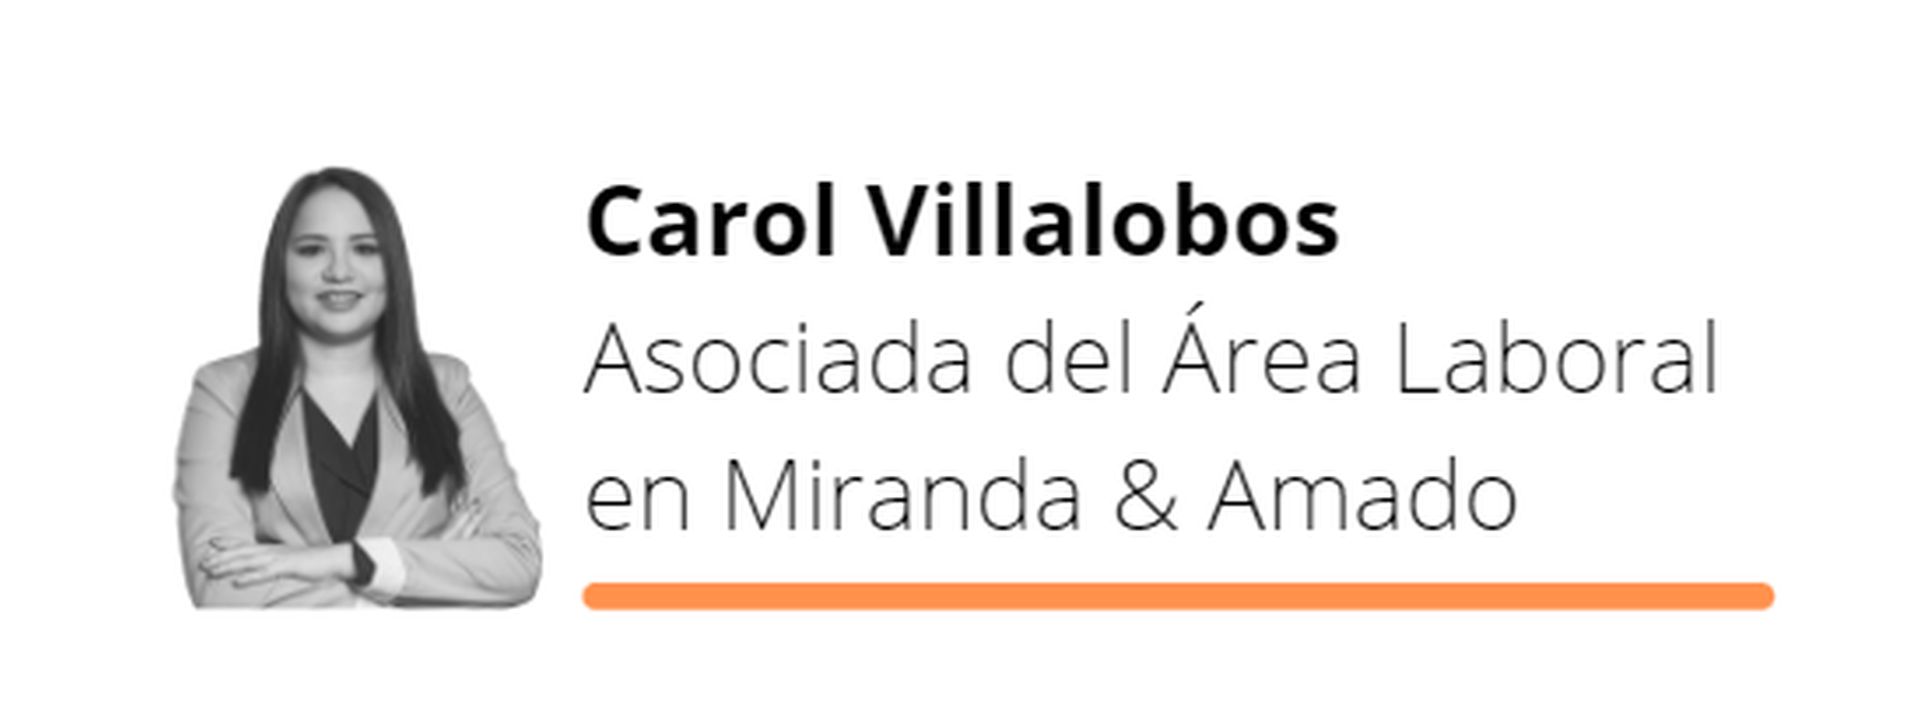 Carol Villalobos